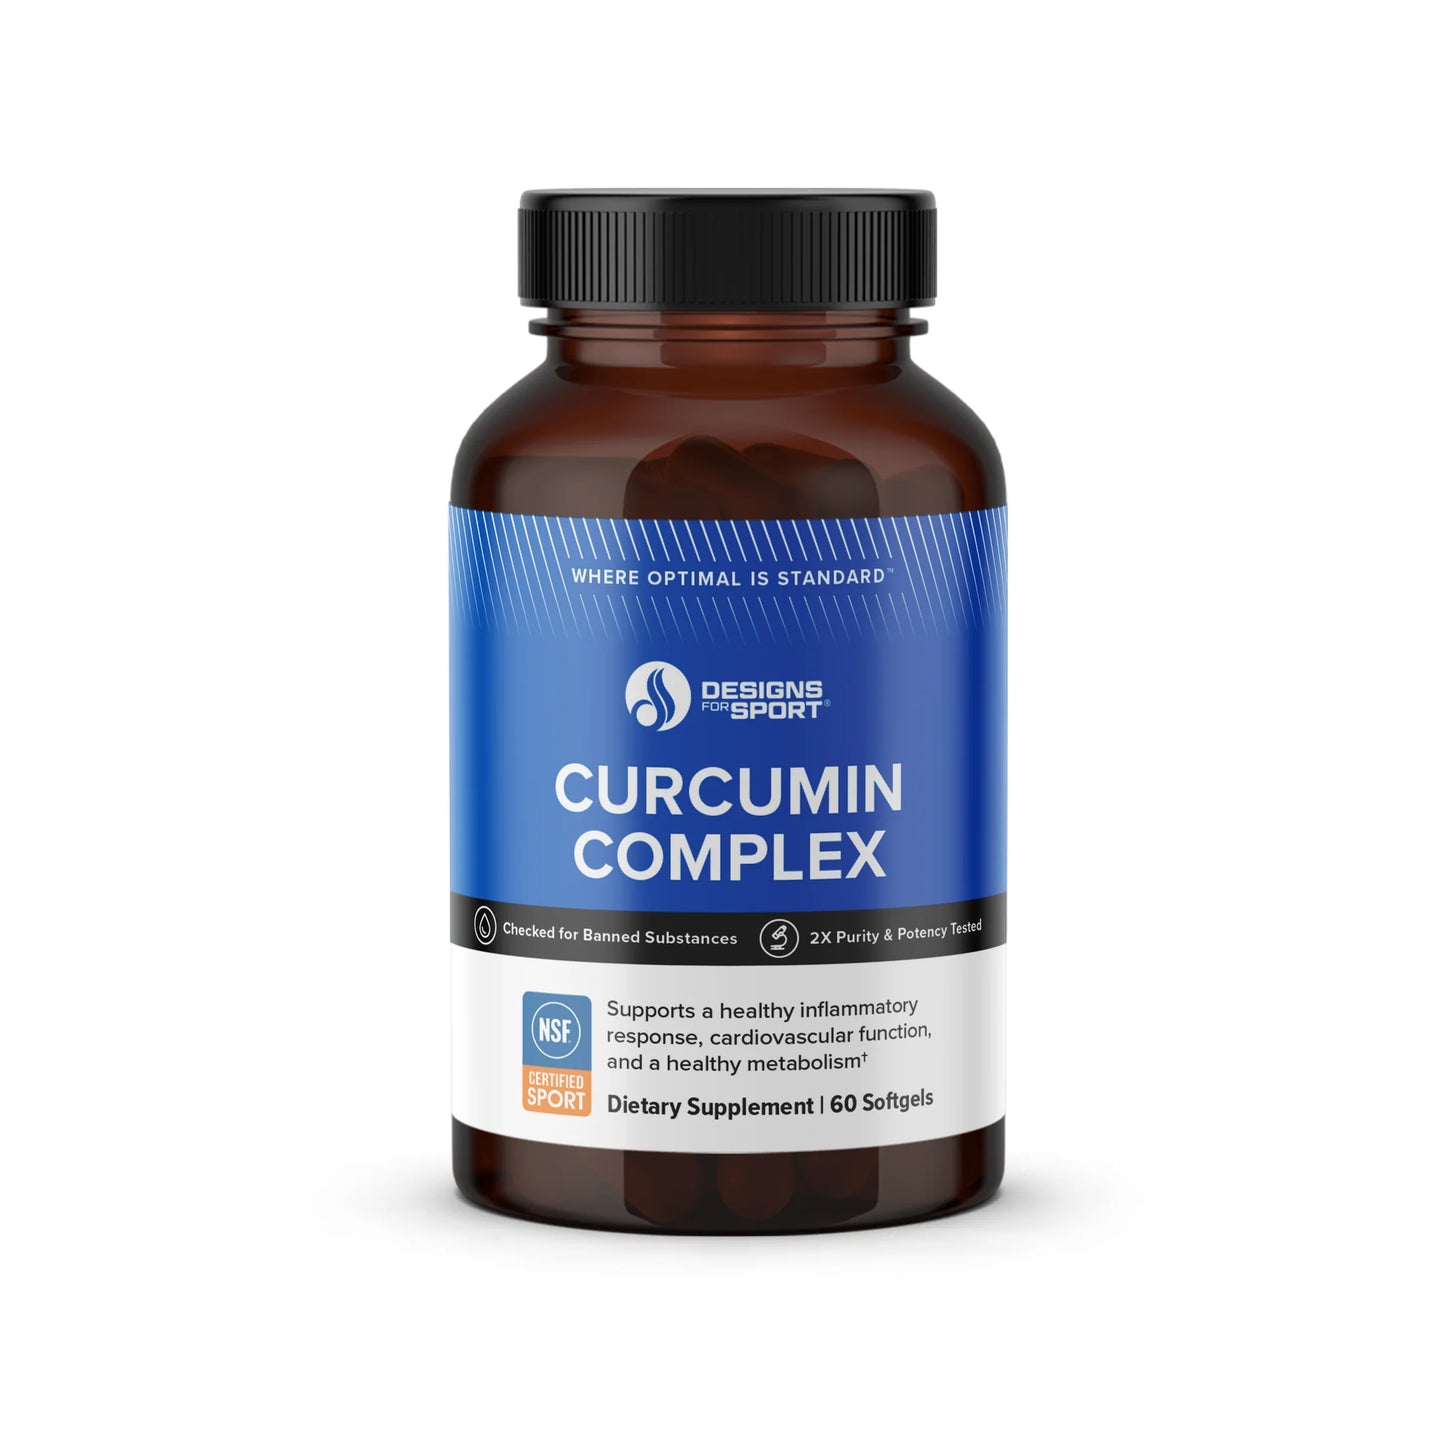 Curcumin Complex Designs for Sport (DFS)